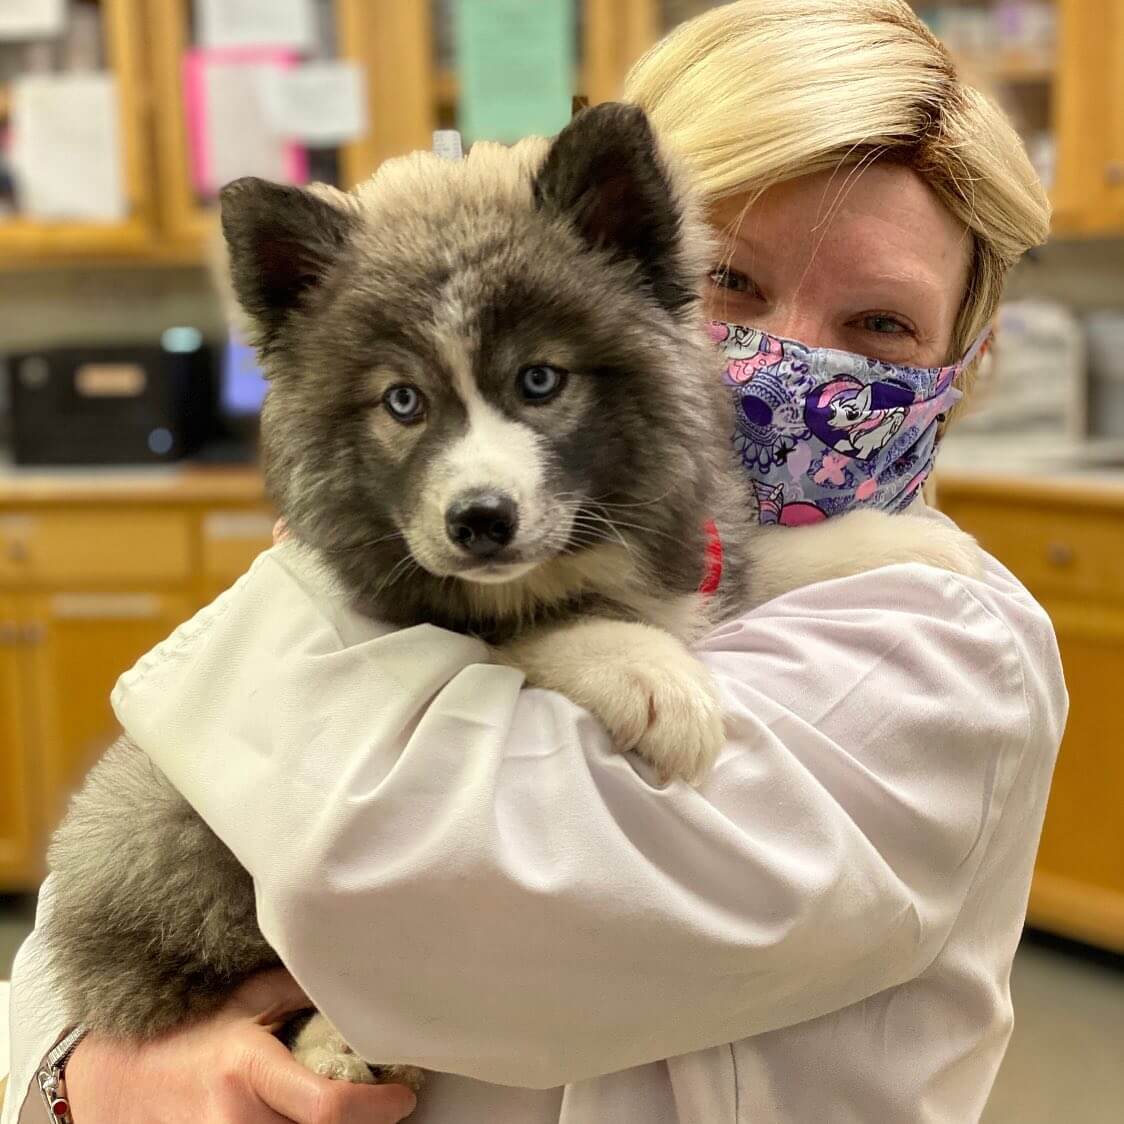 Staff holding dog